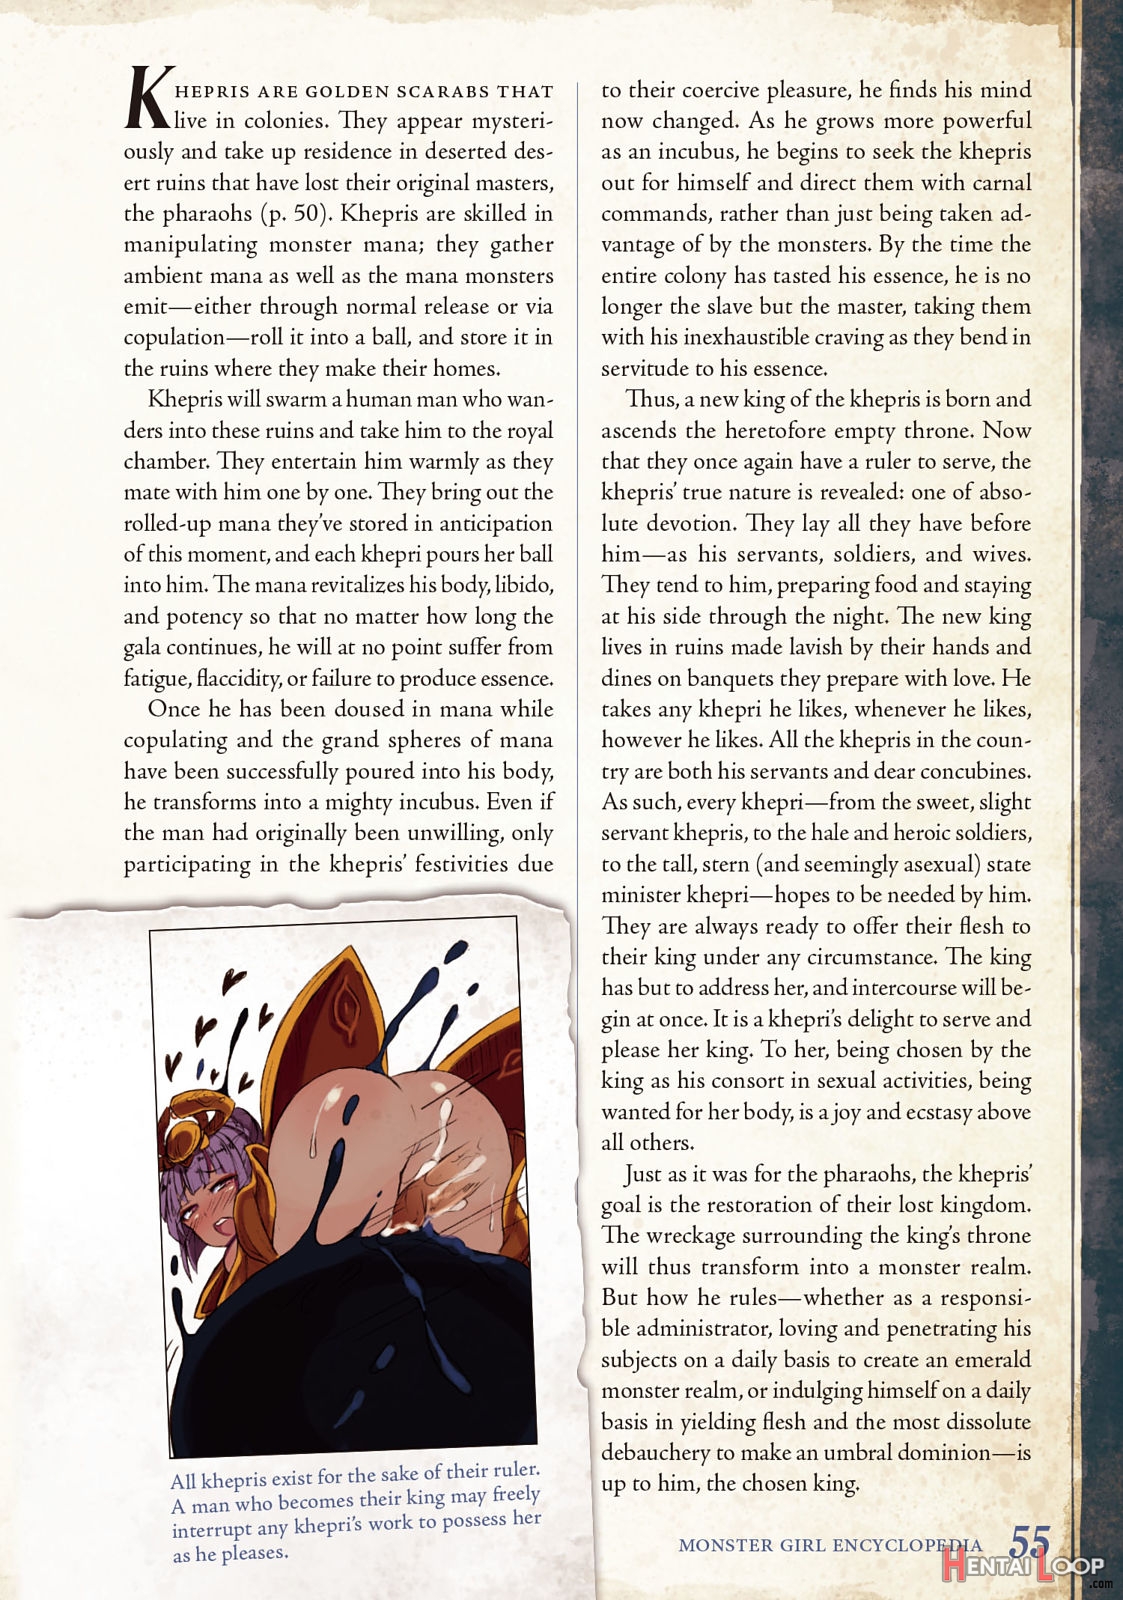 Monster Girl Encyclopedia Vol. 2 page 56